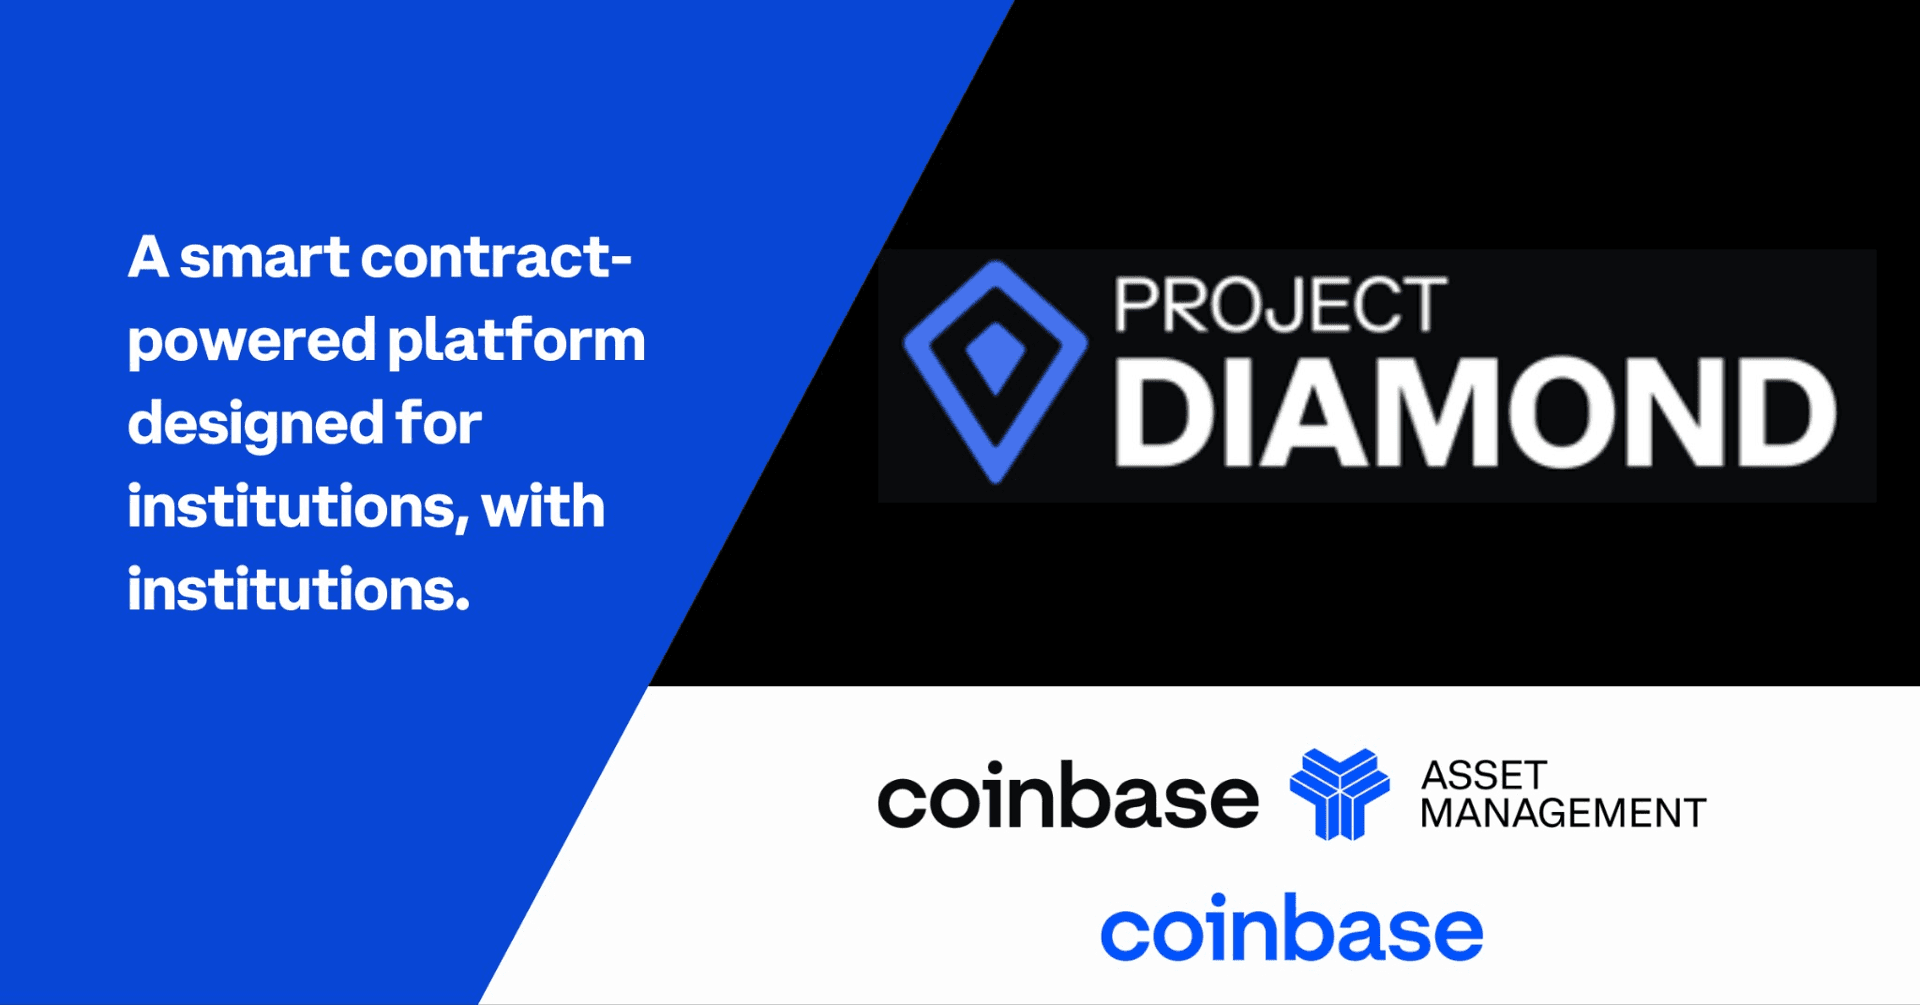 project diamond coinbase